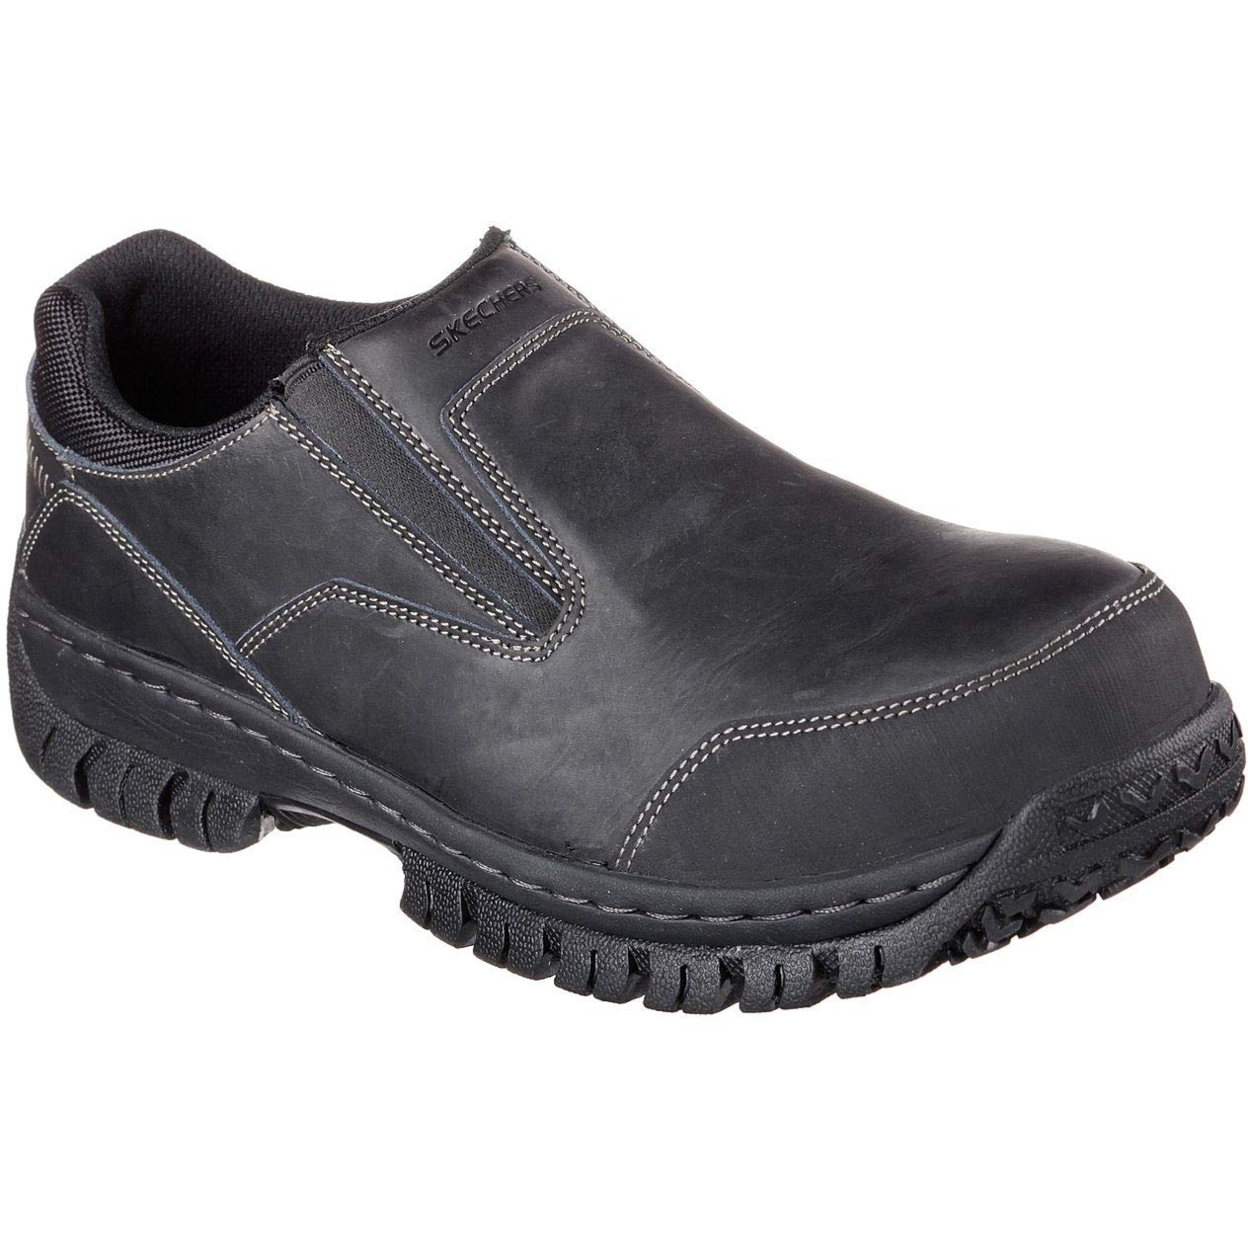 Skechers For Work Men's Hartan Steel Toe Slip-On Shoe Varies BLACK - BLACK, 7.5